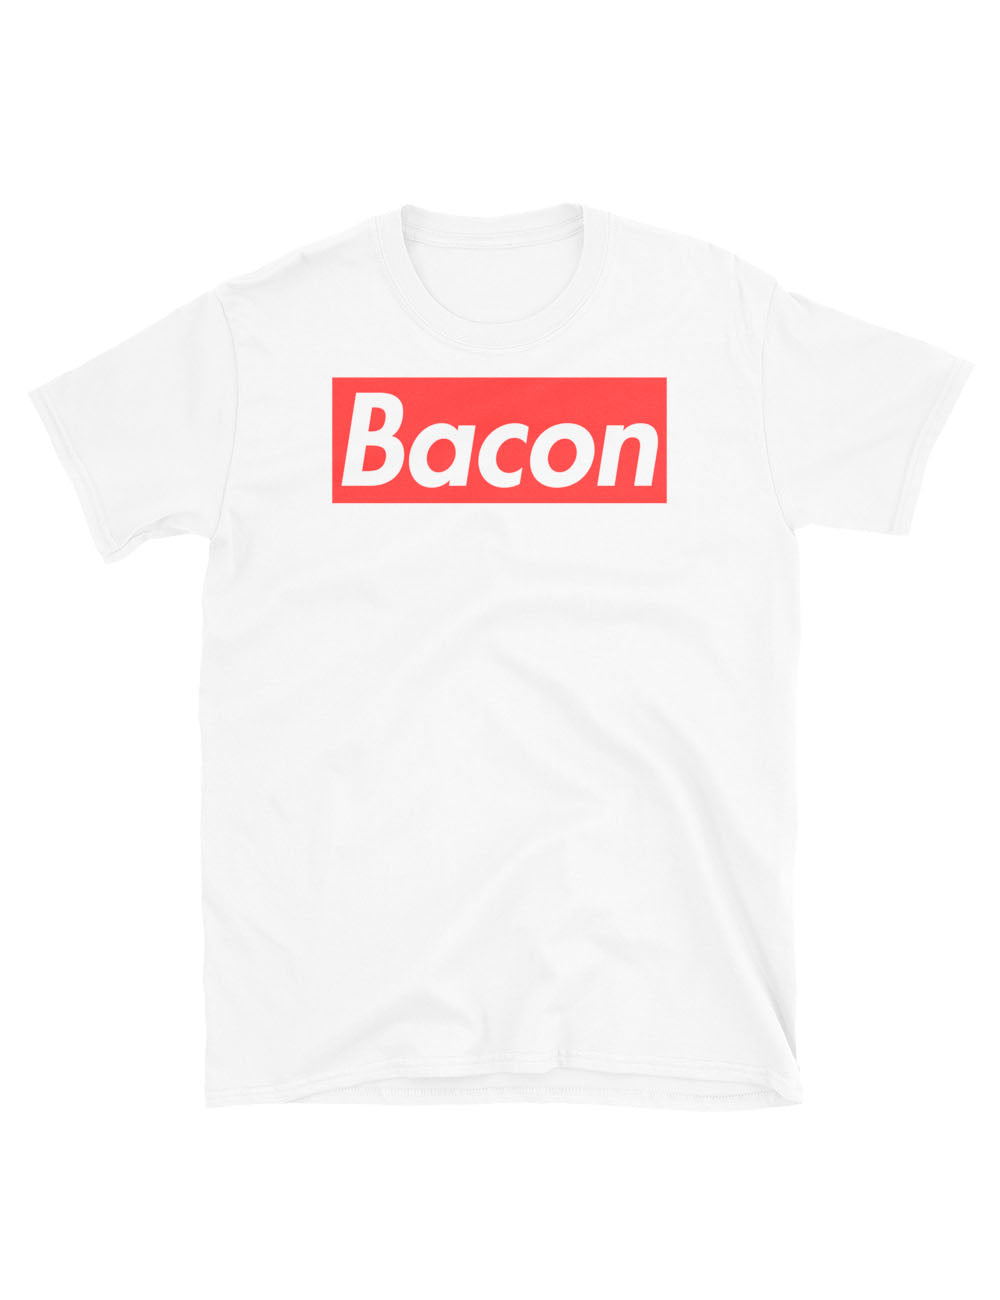 Bacon T Shirt Myusernamesthis - t shirt roblox bacon hair